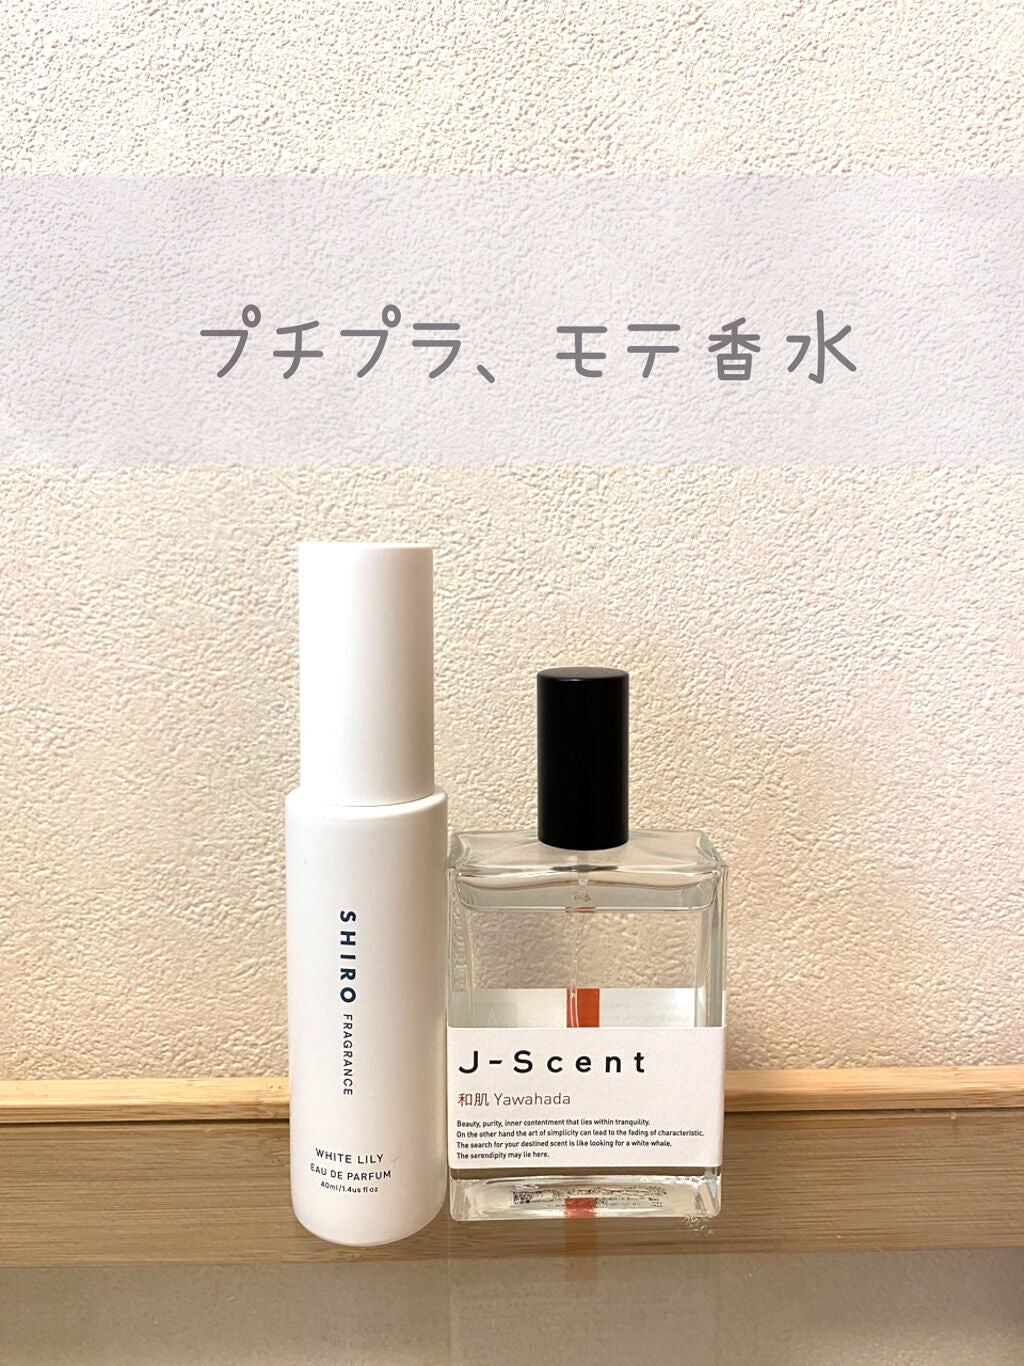 SHIRO・J-Scentの香水(レディース)を使った口コミ -○SHIRO ホワイト